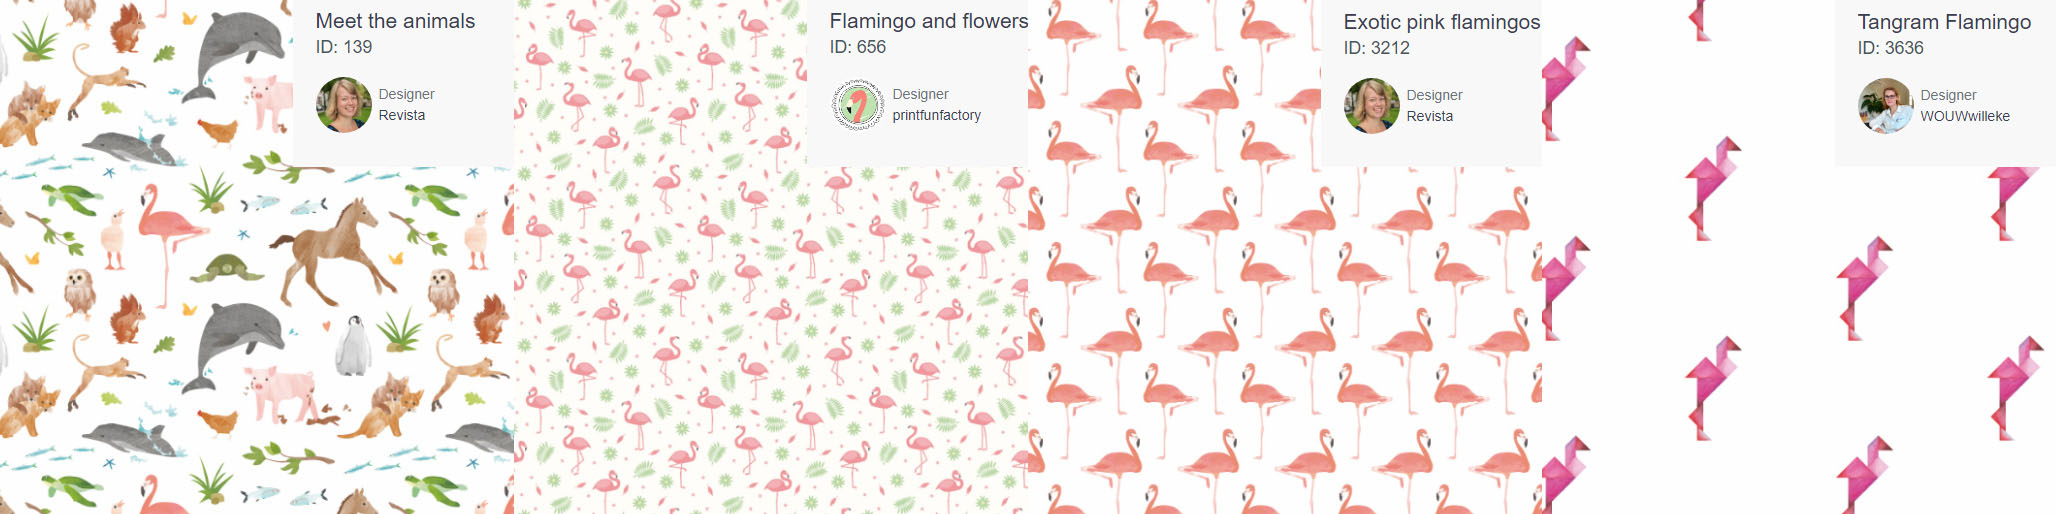 flamingo patronen collage 01jpg